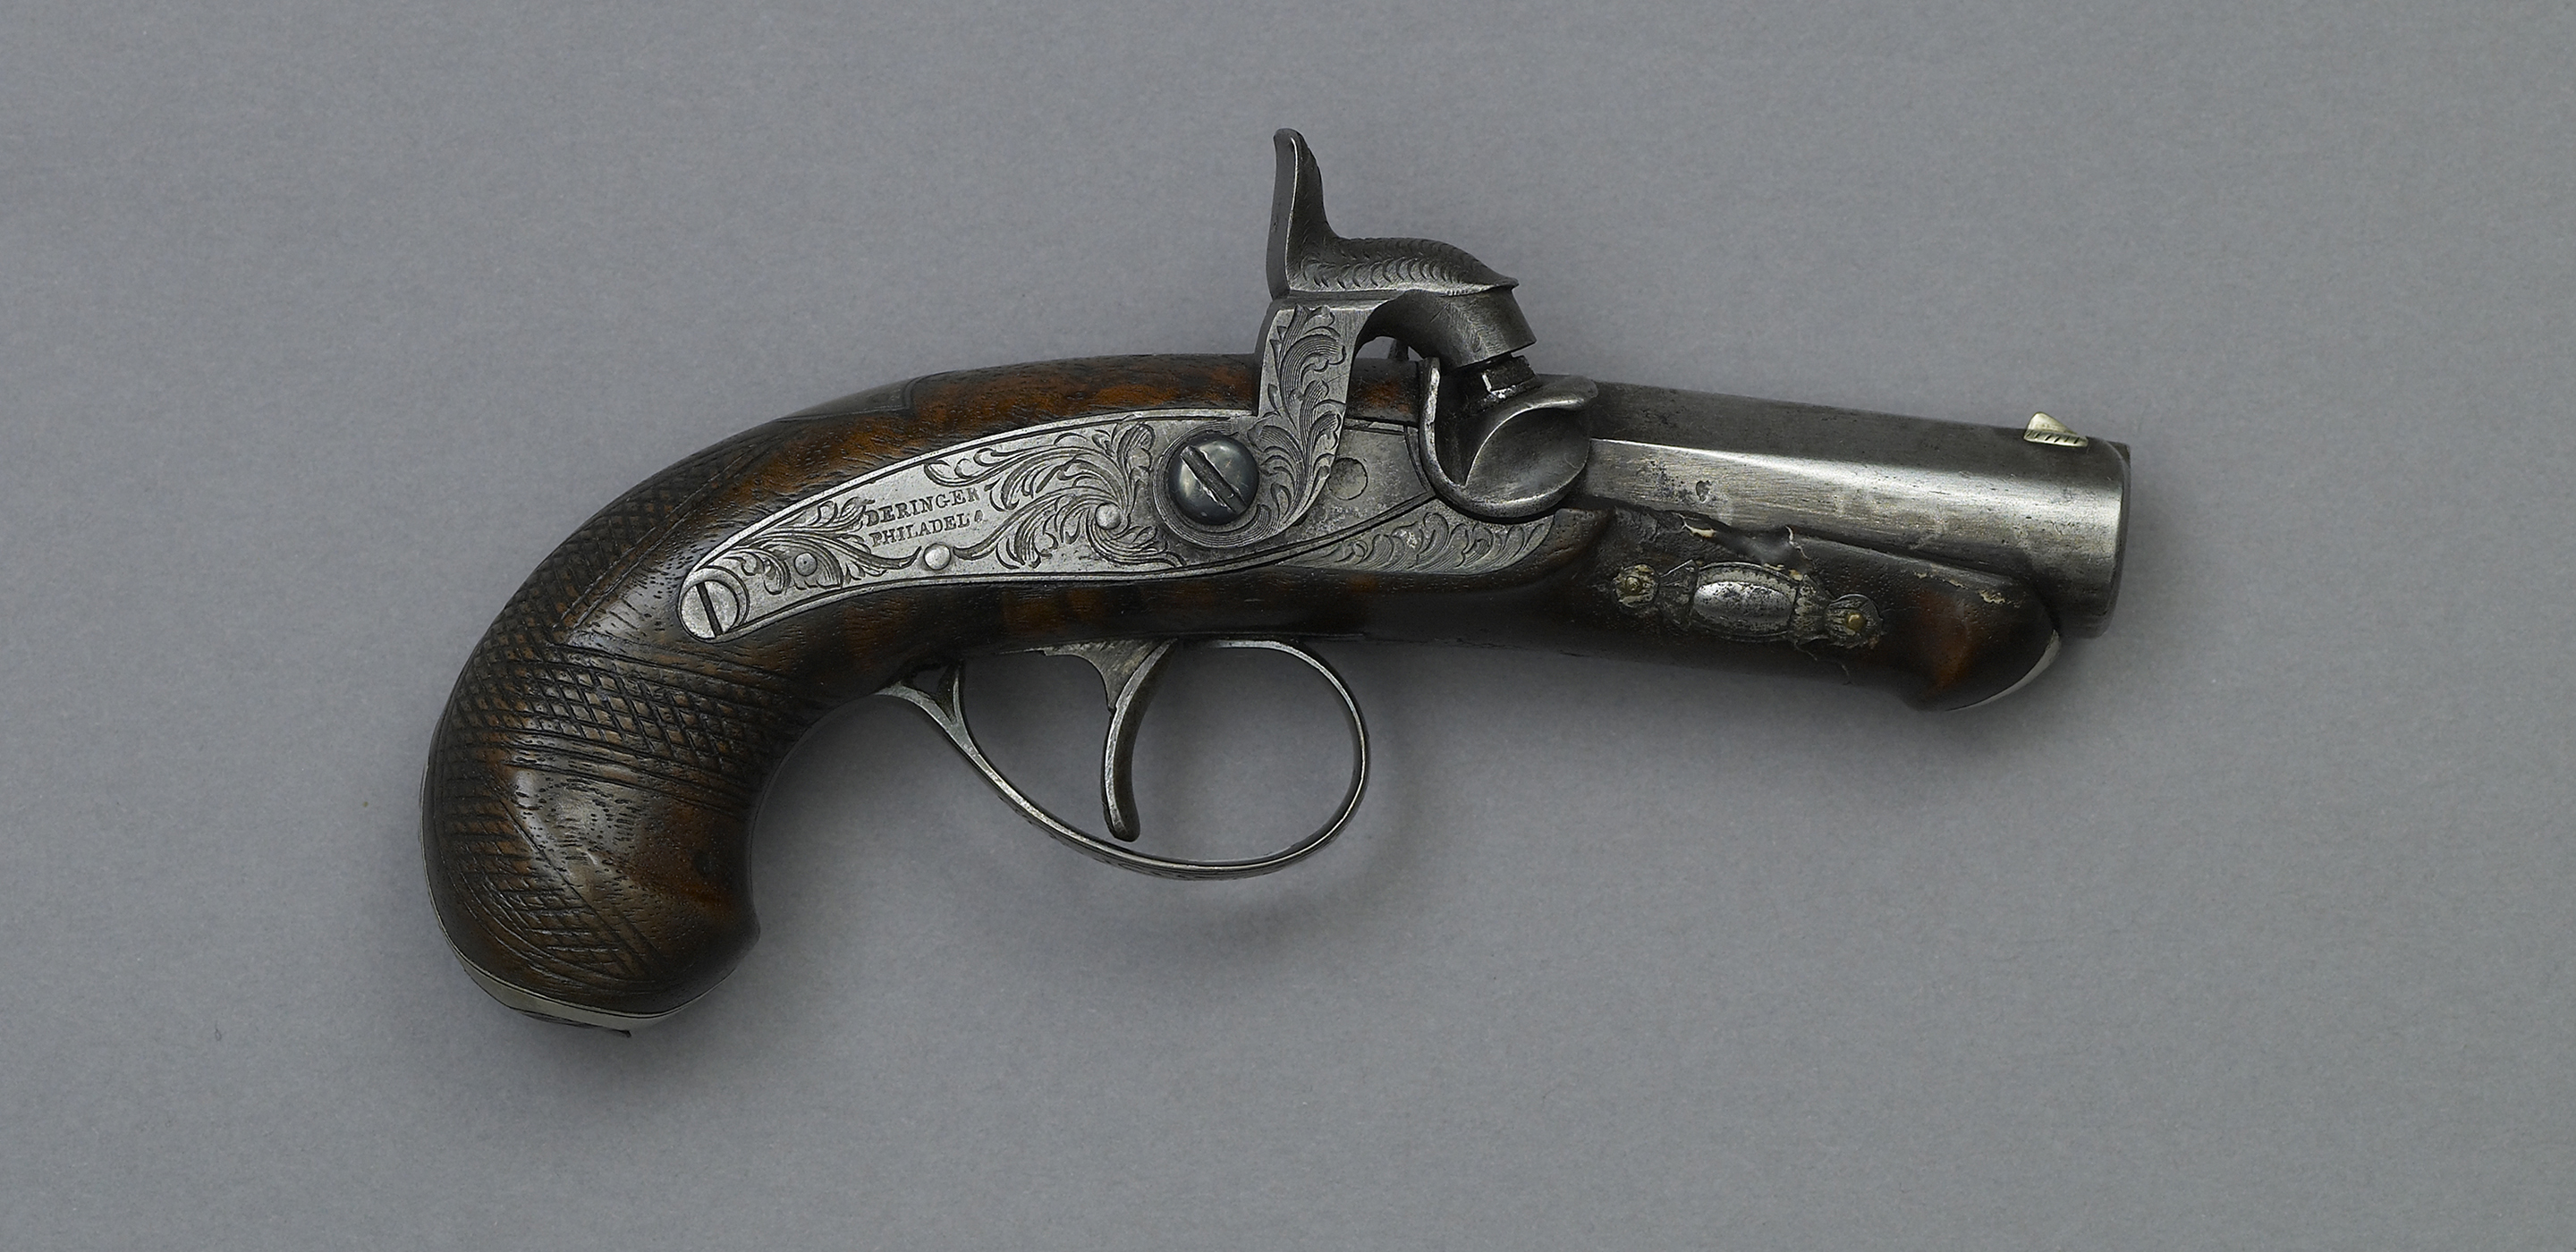 Close up photograph of a small derringer pistol